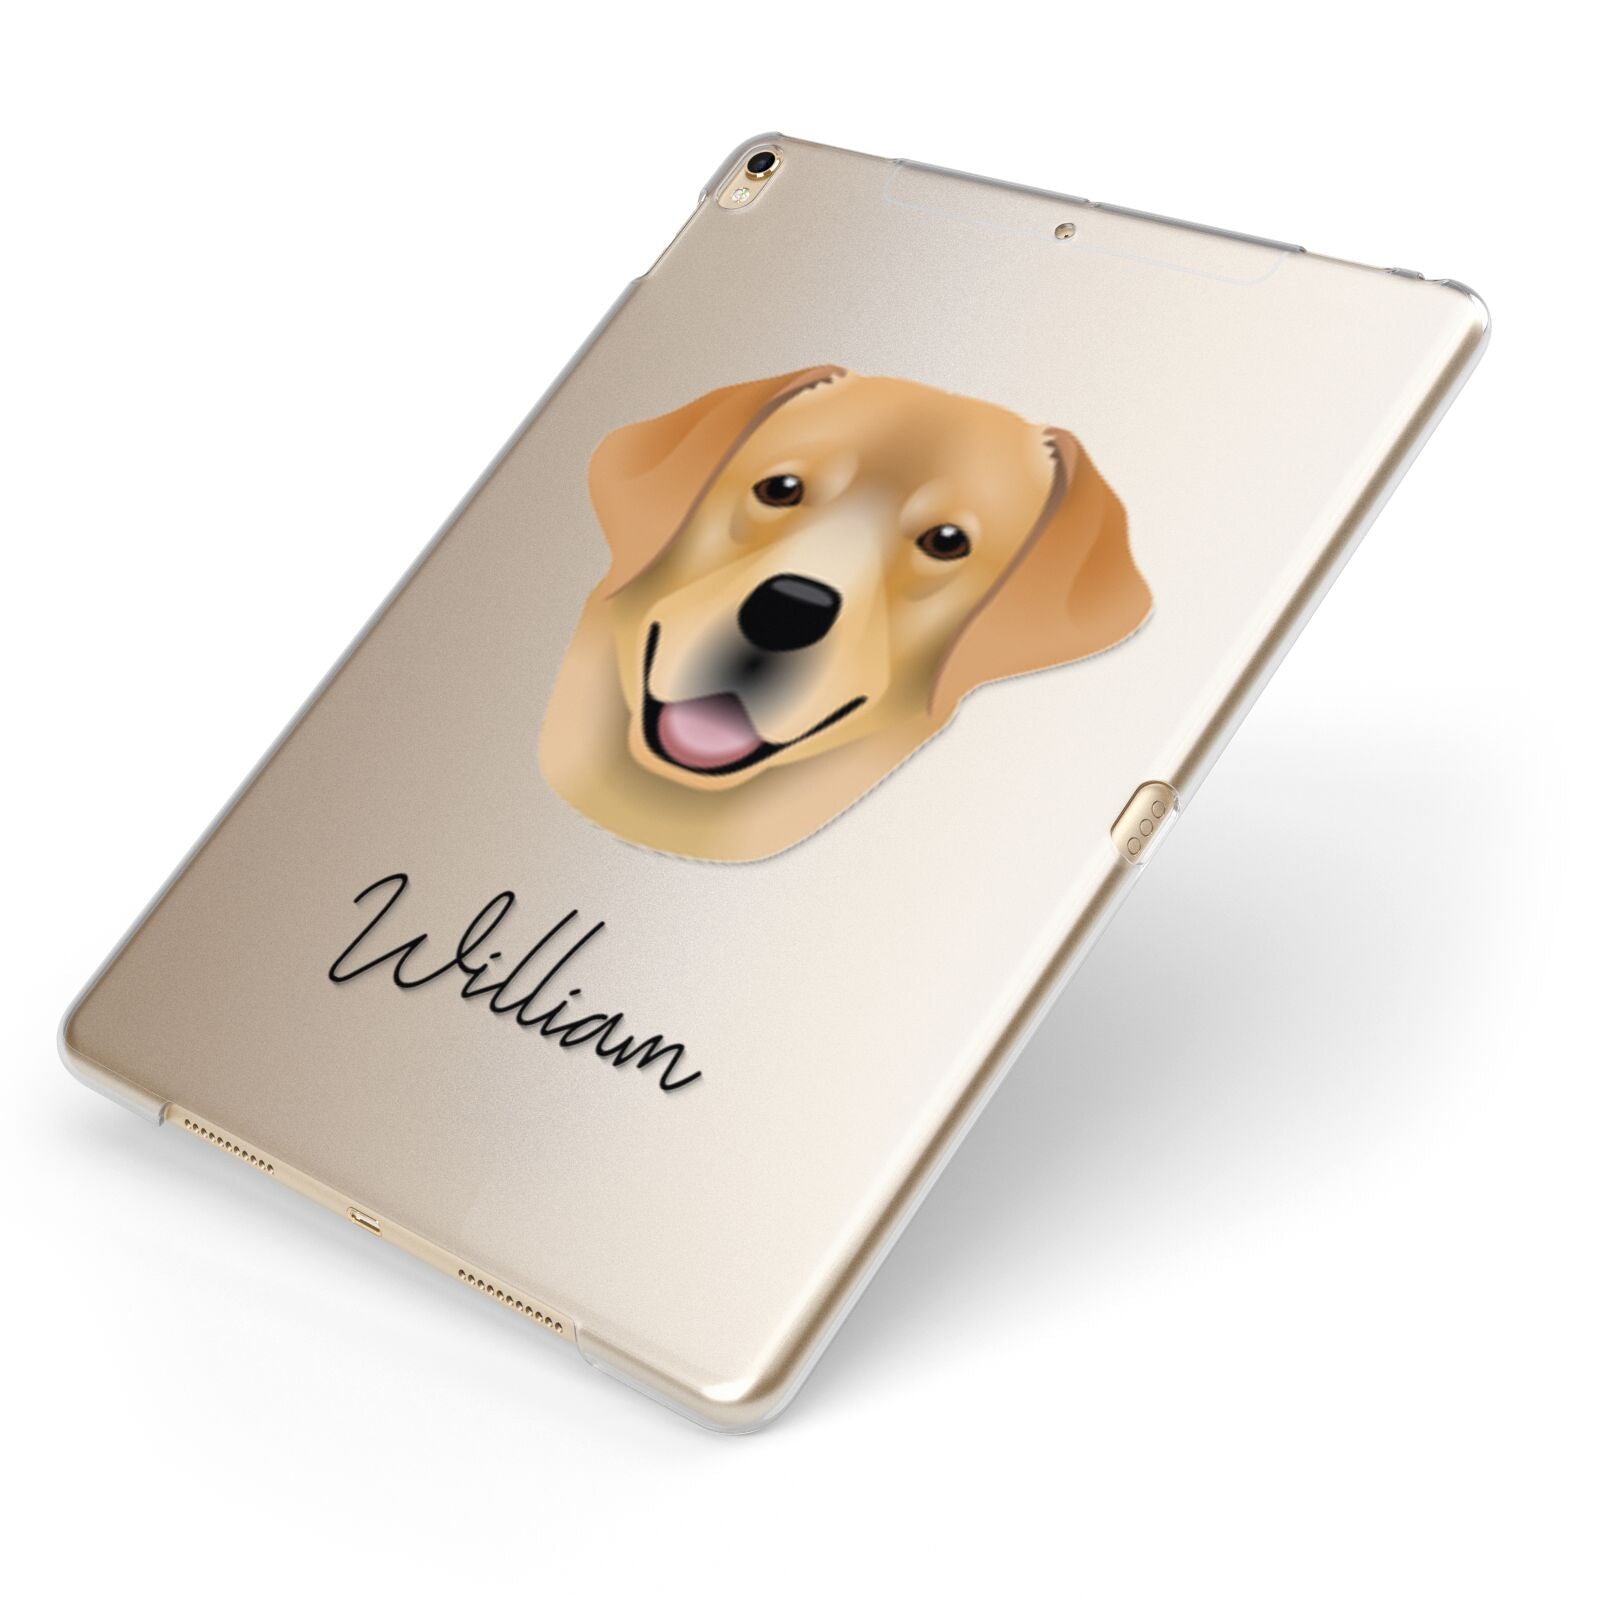 Labrador Retriever Personalised Apple iPad Case on Gold iPad Side View